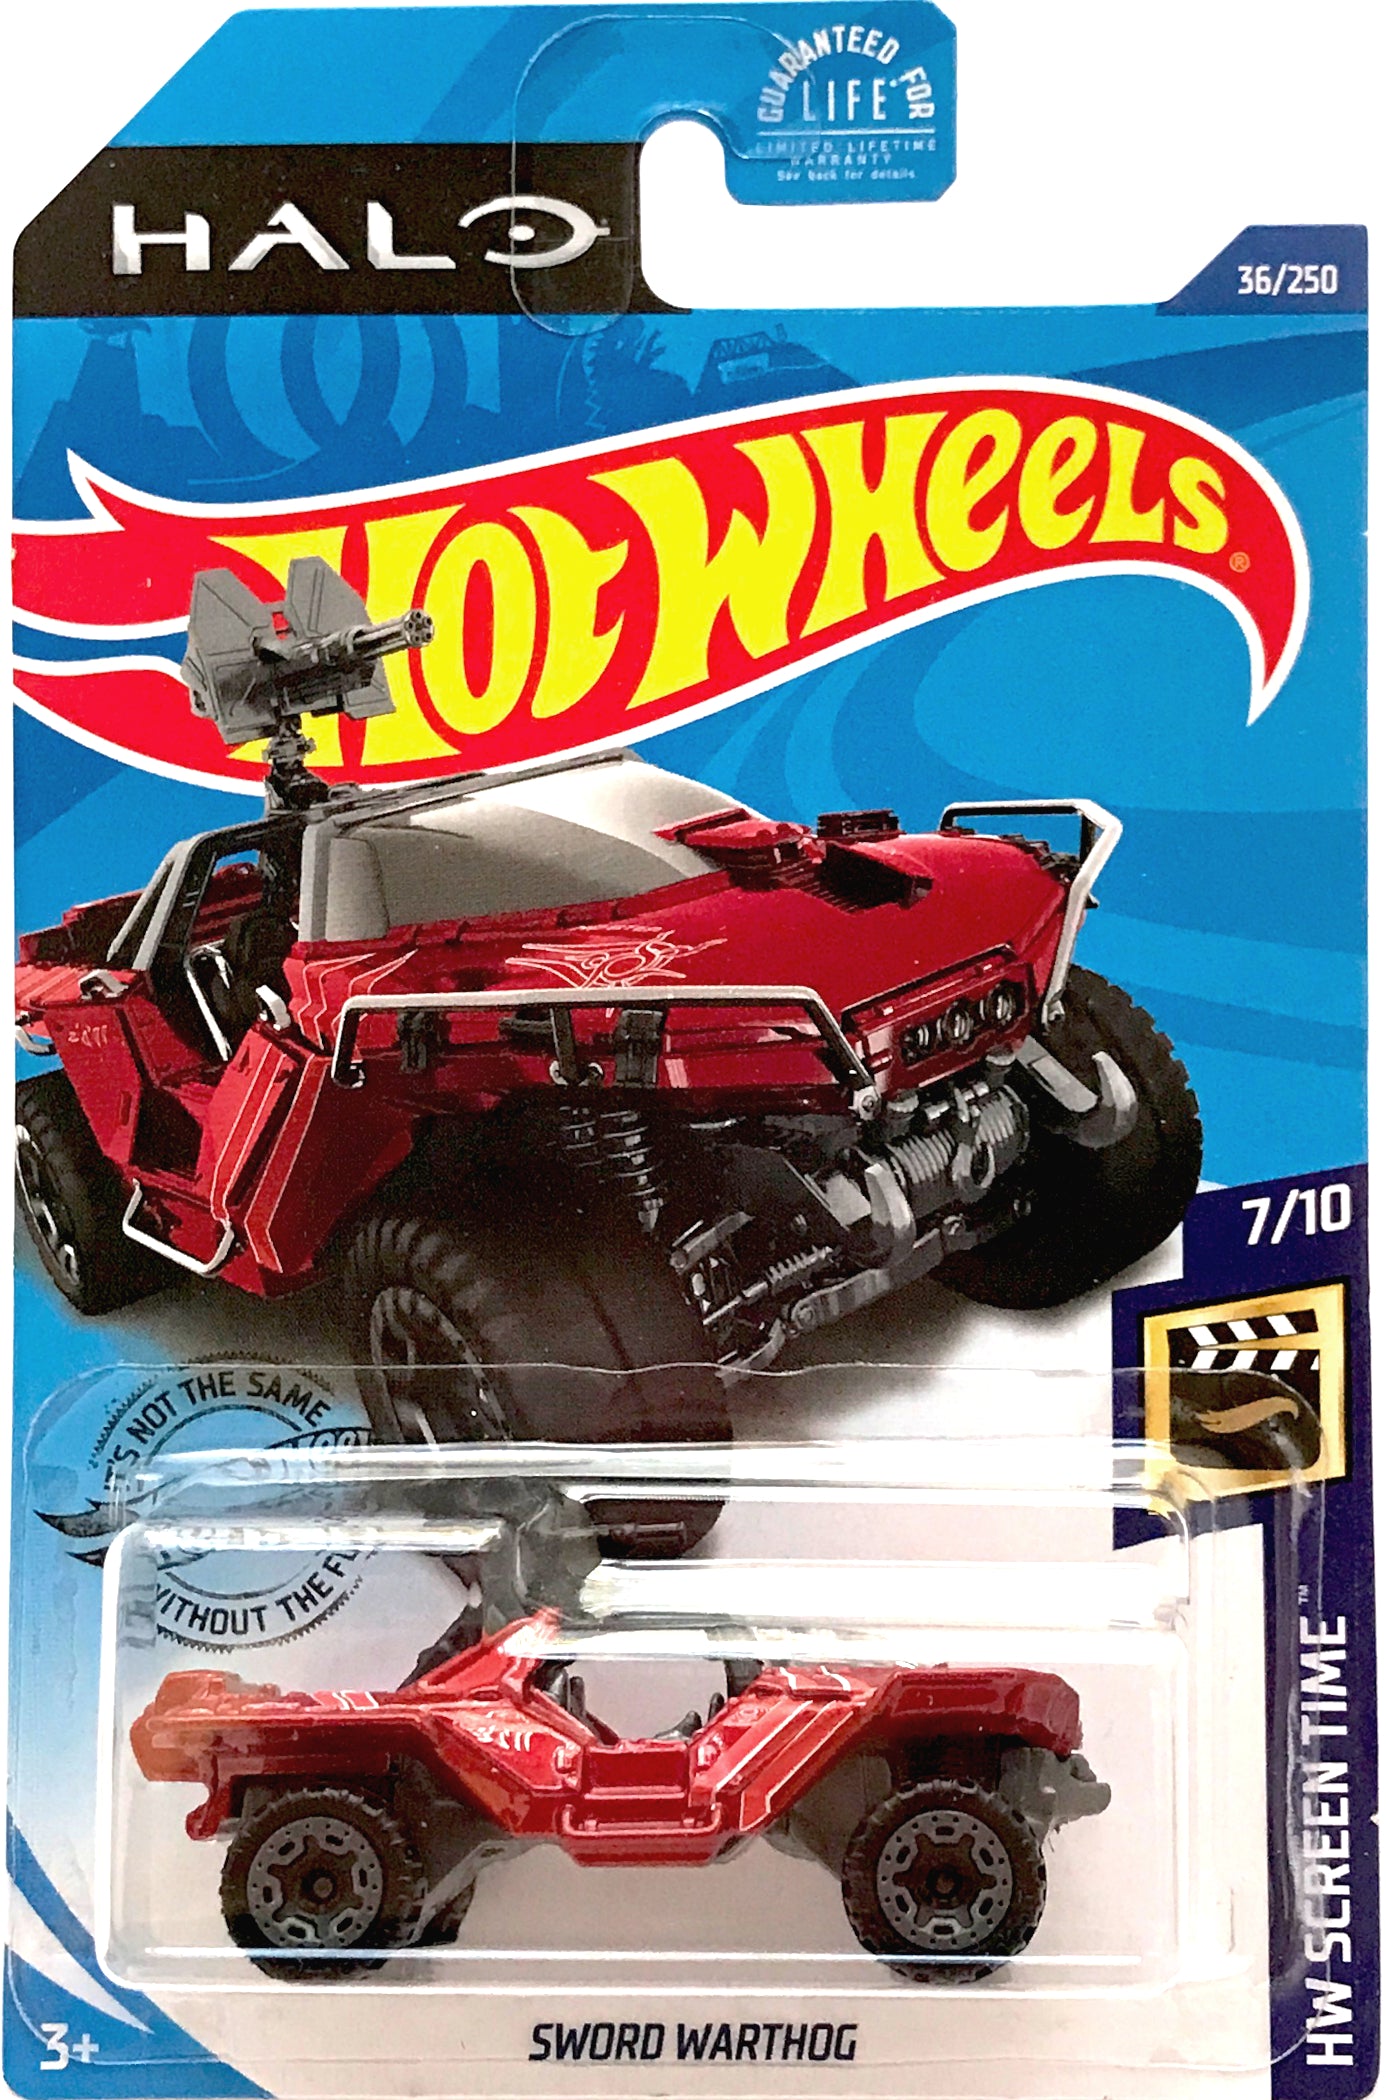 2020 Hot Wheels Mainline #036 - Halo Sword Warthog (Red) GHC79